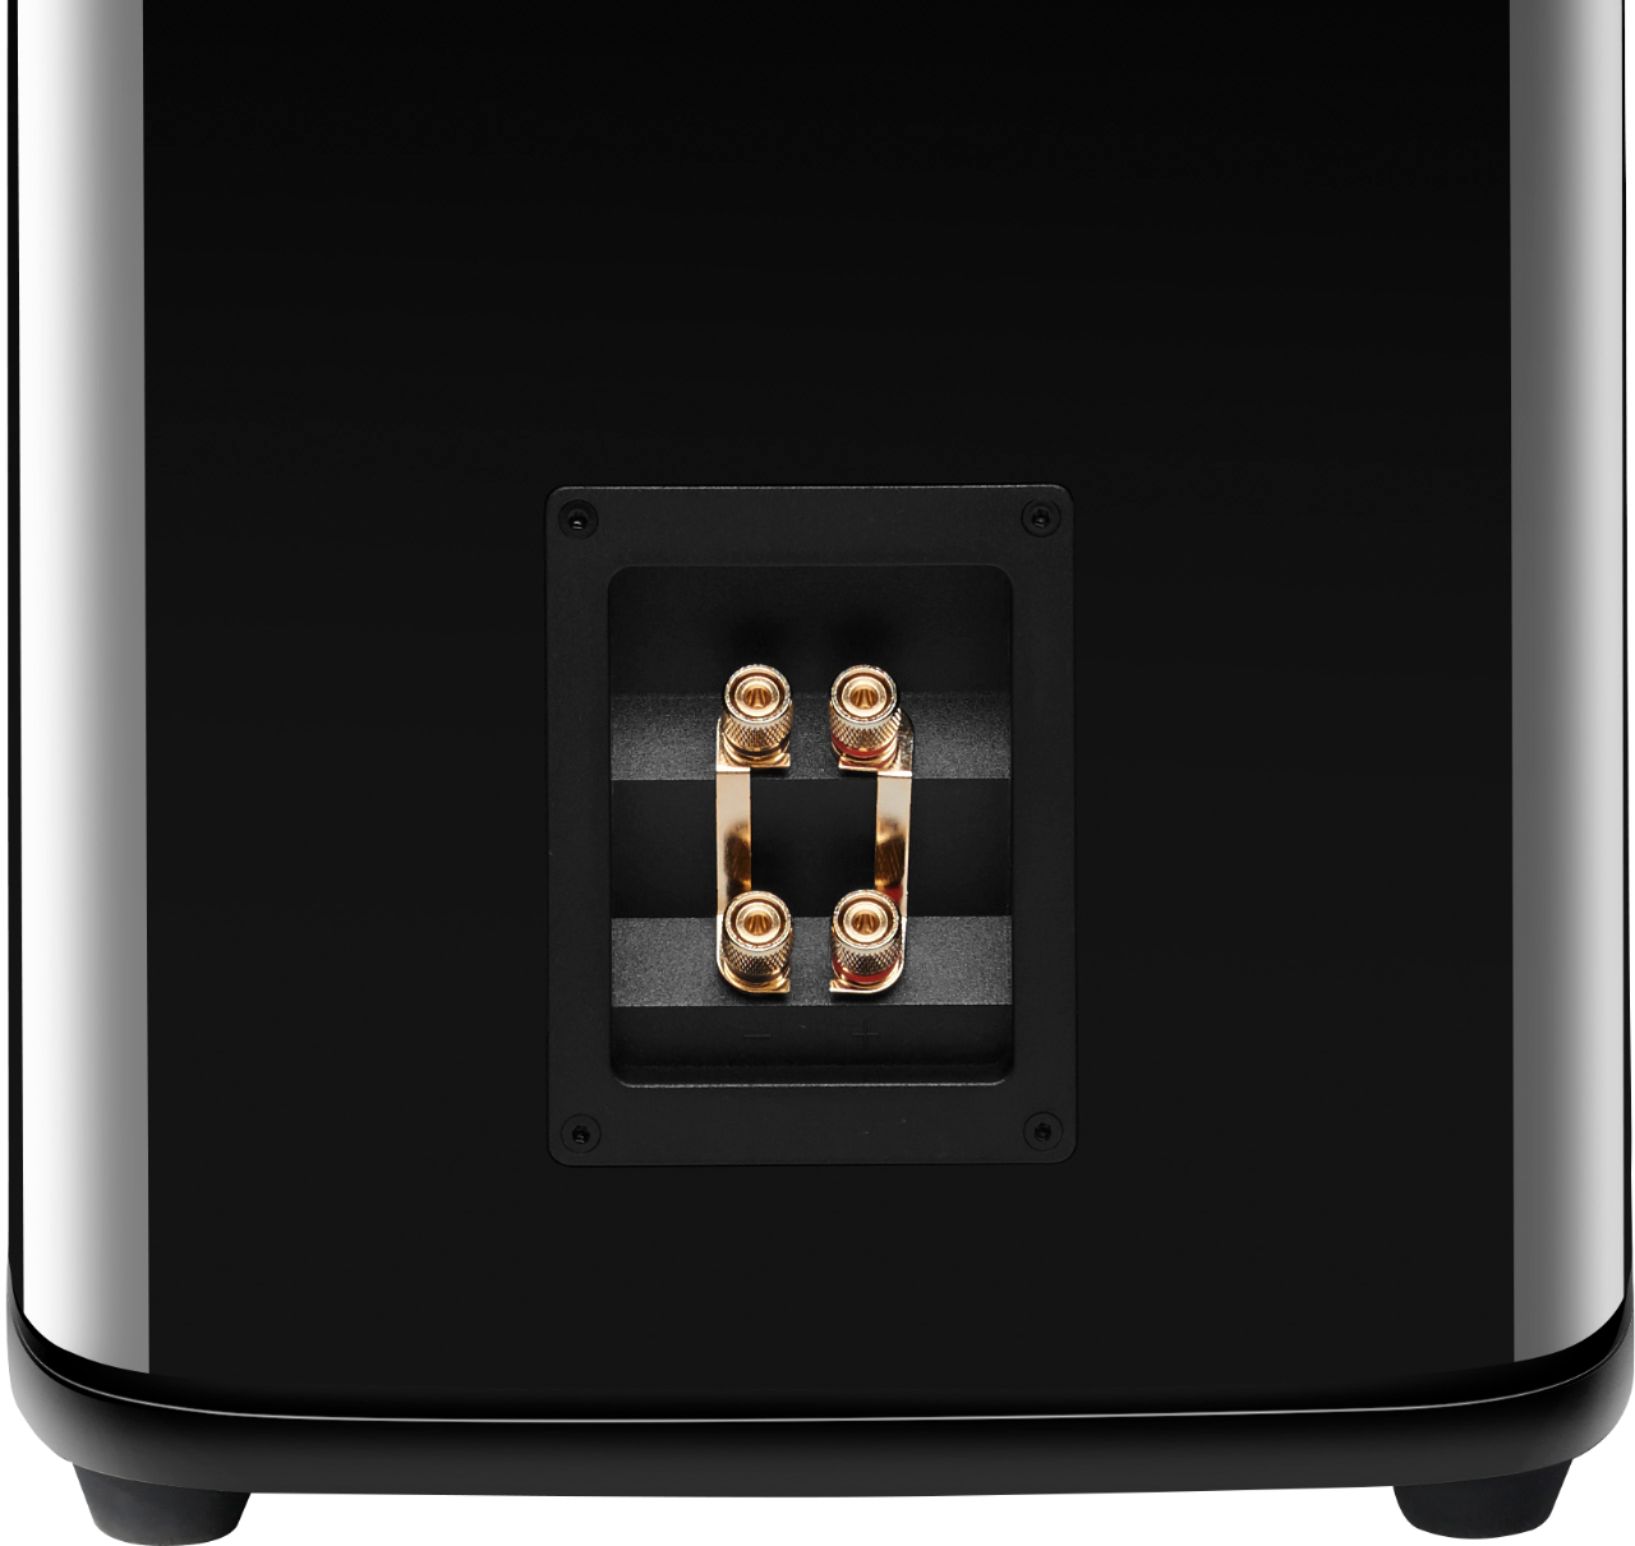 Back View: JBL - HDI3800 Triple 8-inch 2-1/2 way Floorstanding Loudspeaker with 1" compression tweeter - Gloss Black Finish